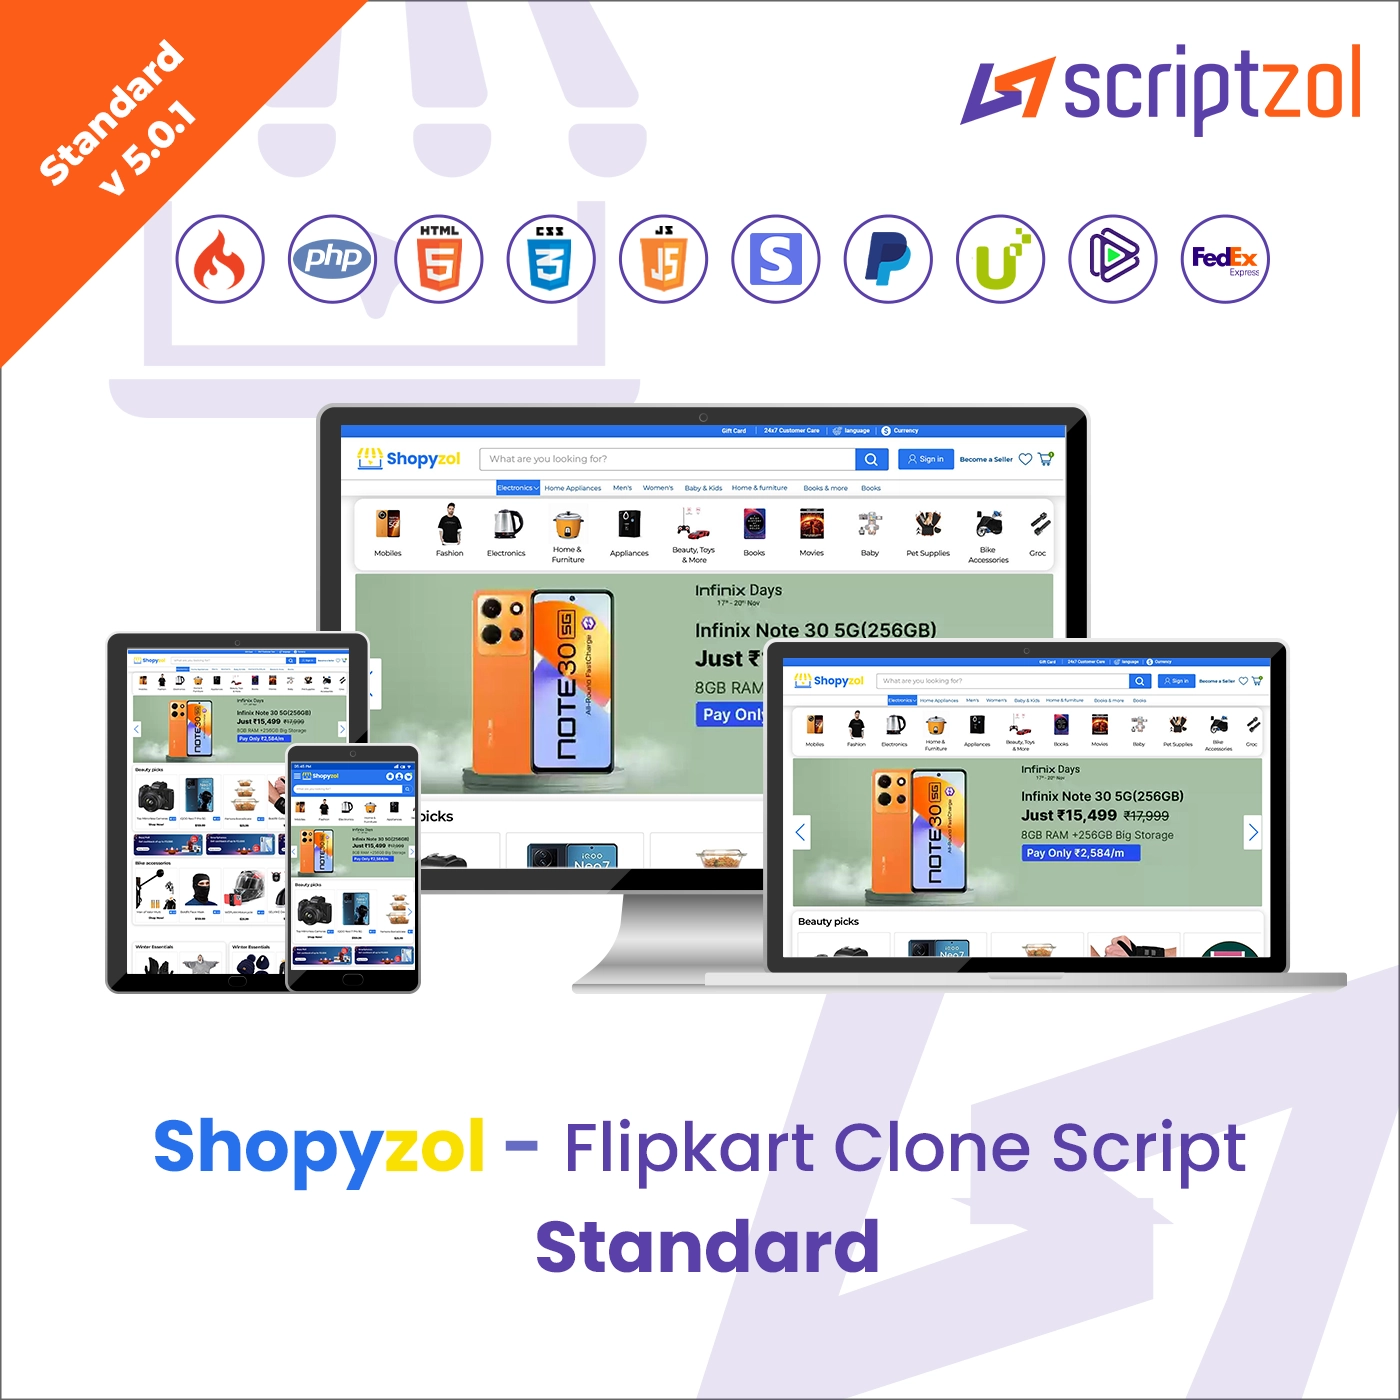 Shopyzol - Flipkart Clone Script Standard